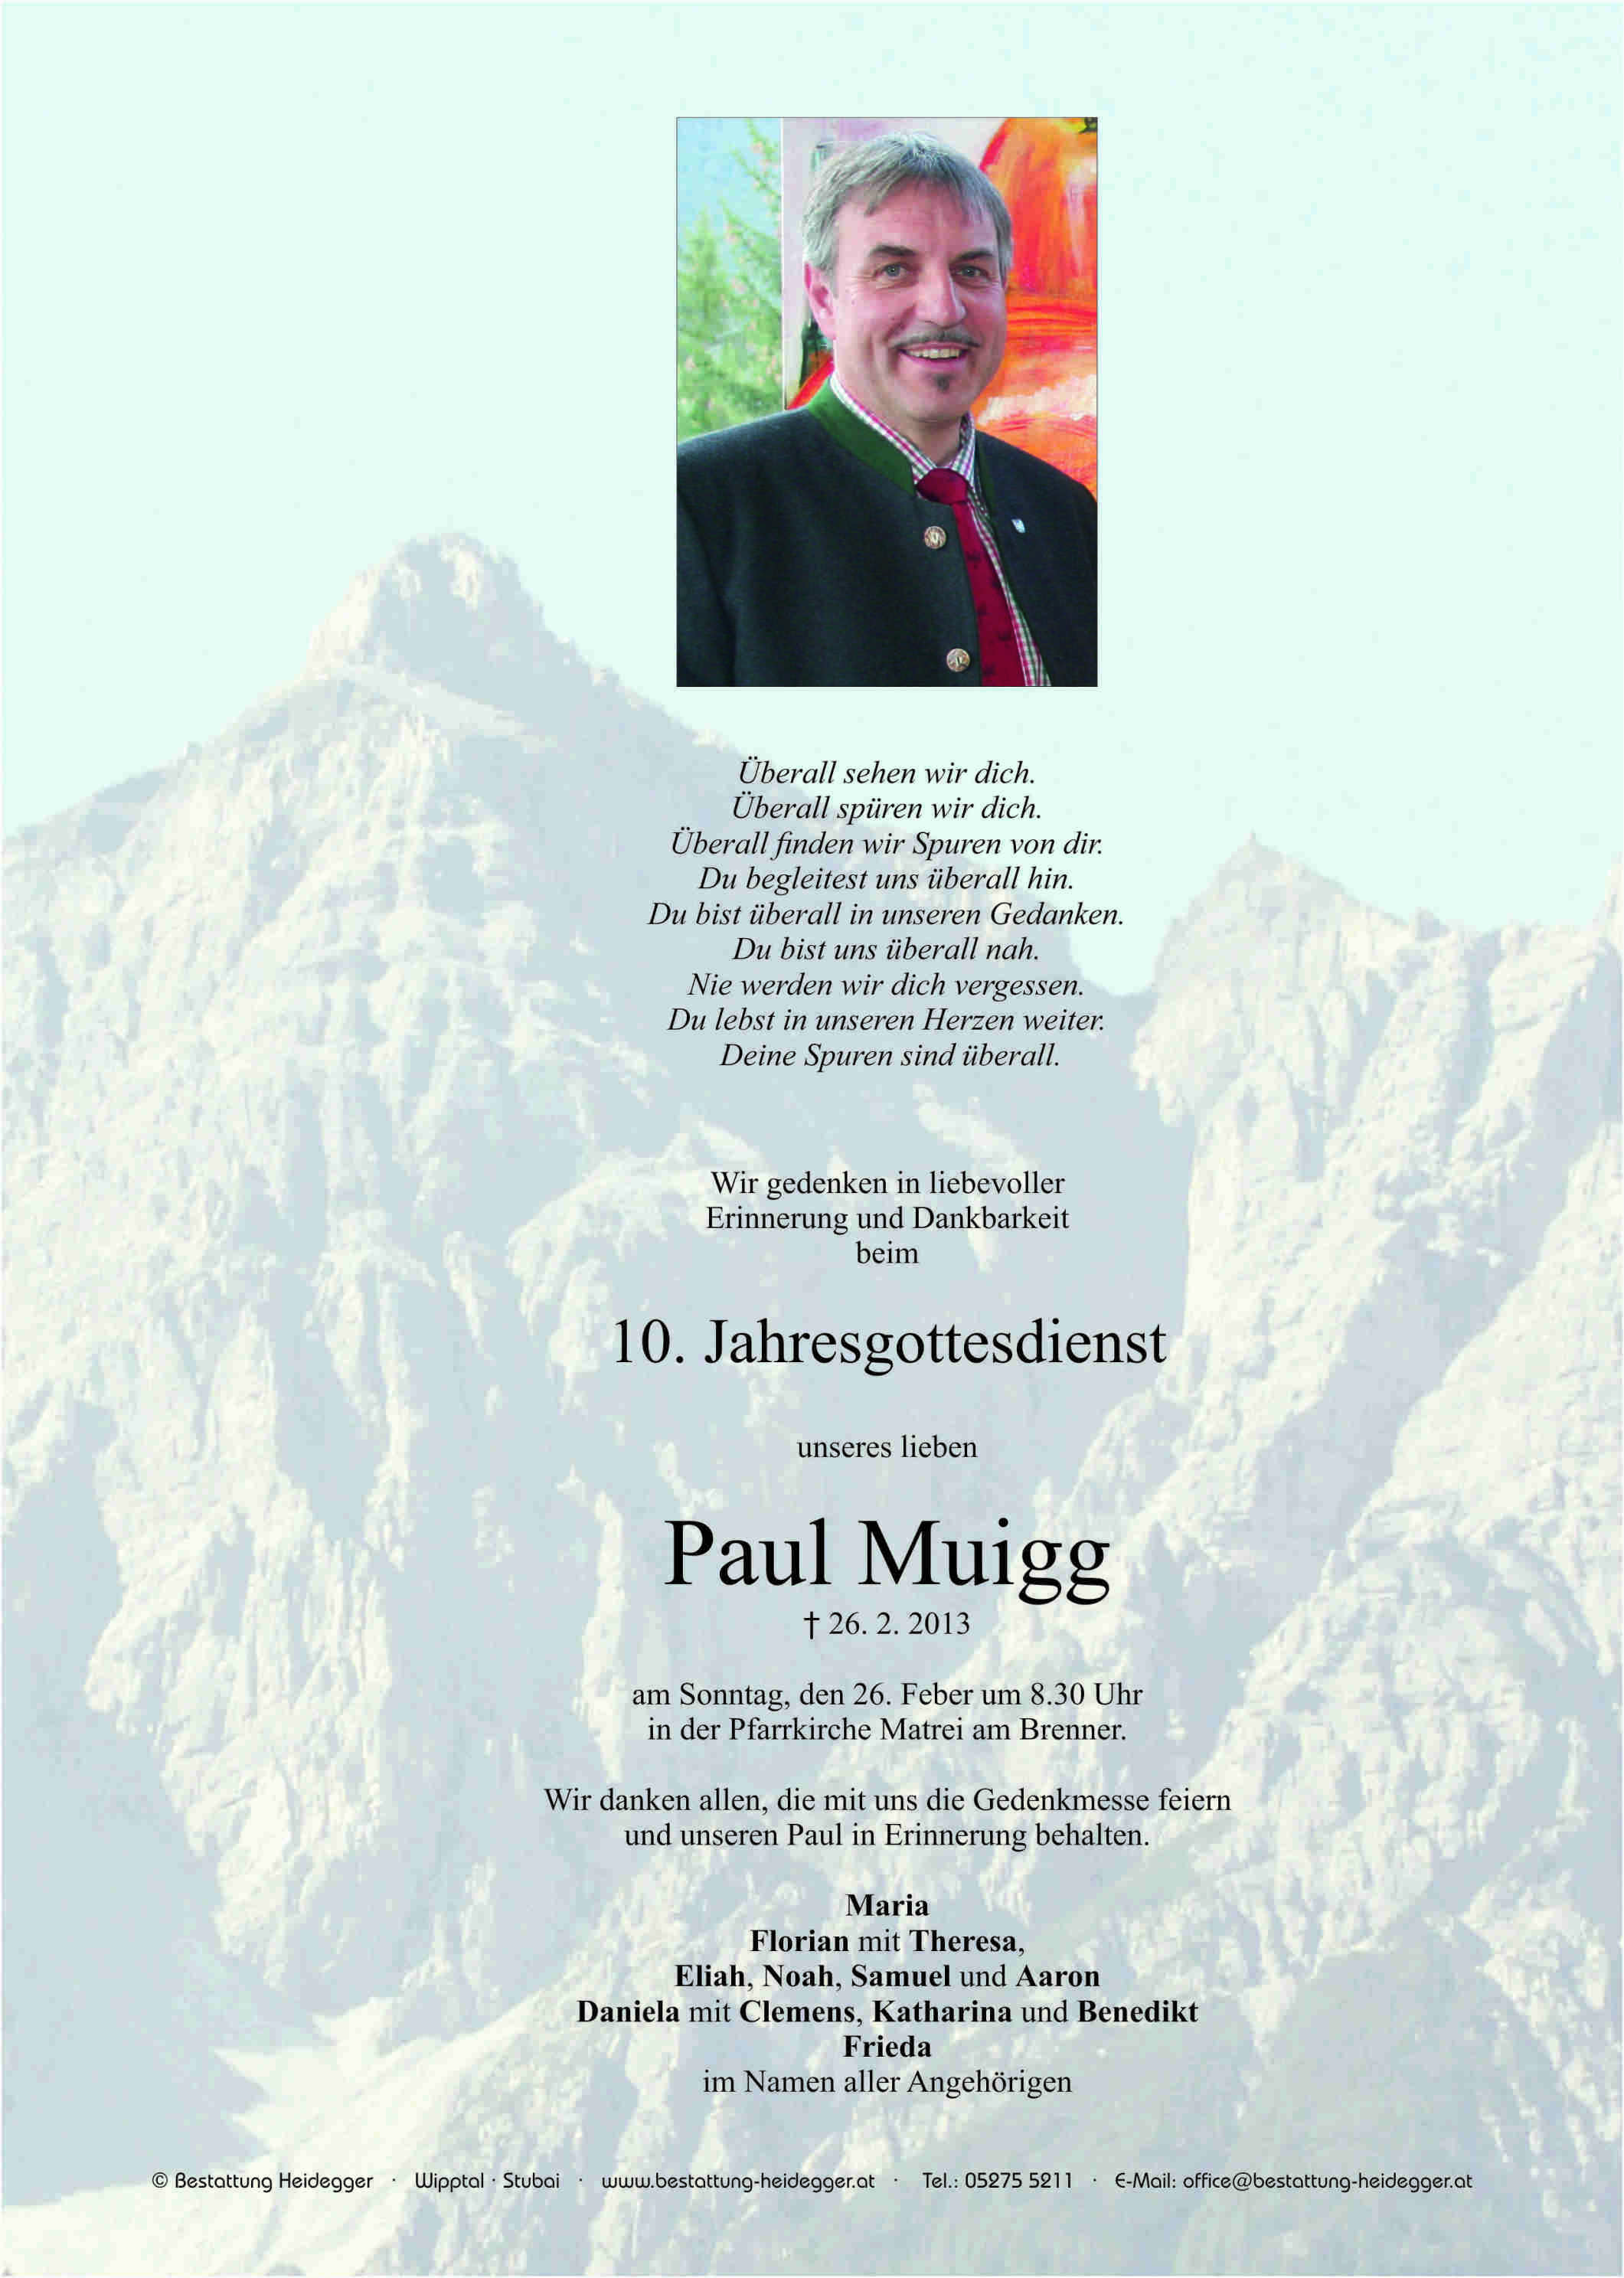 Paul Muigg